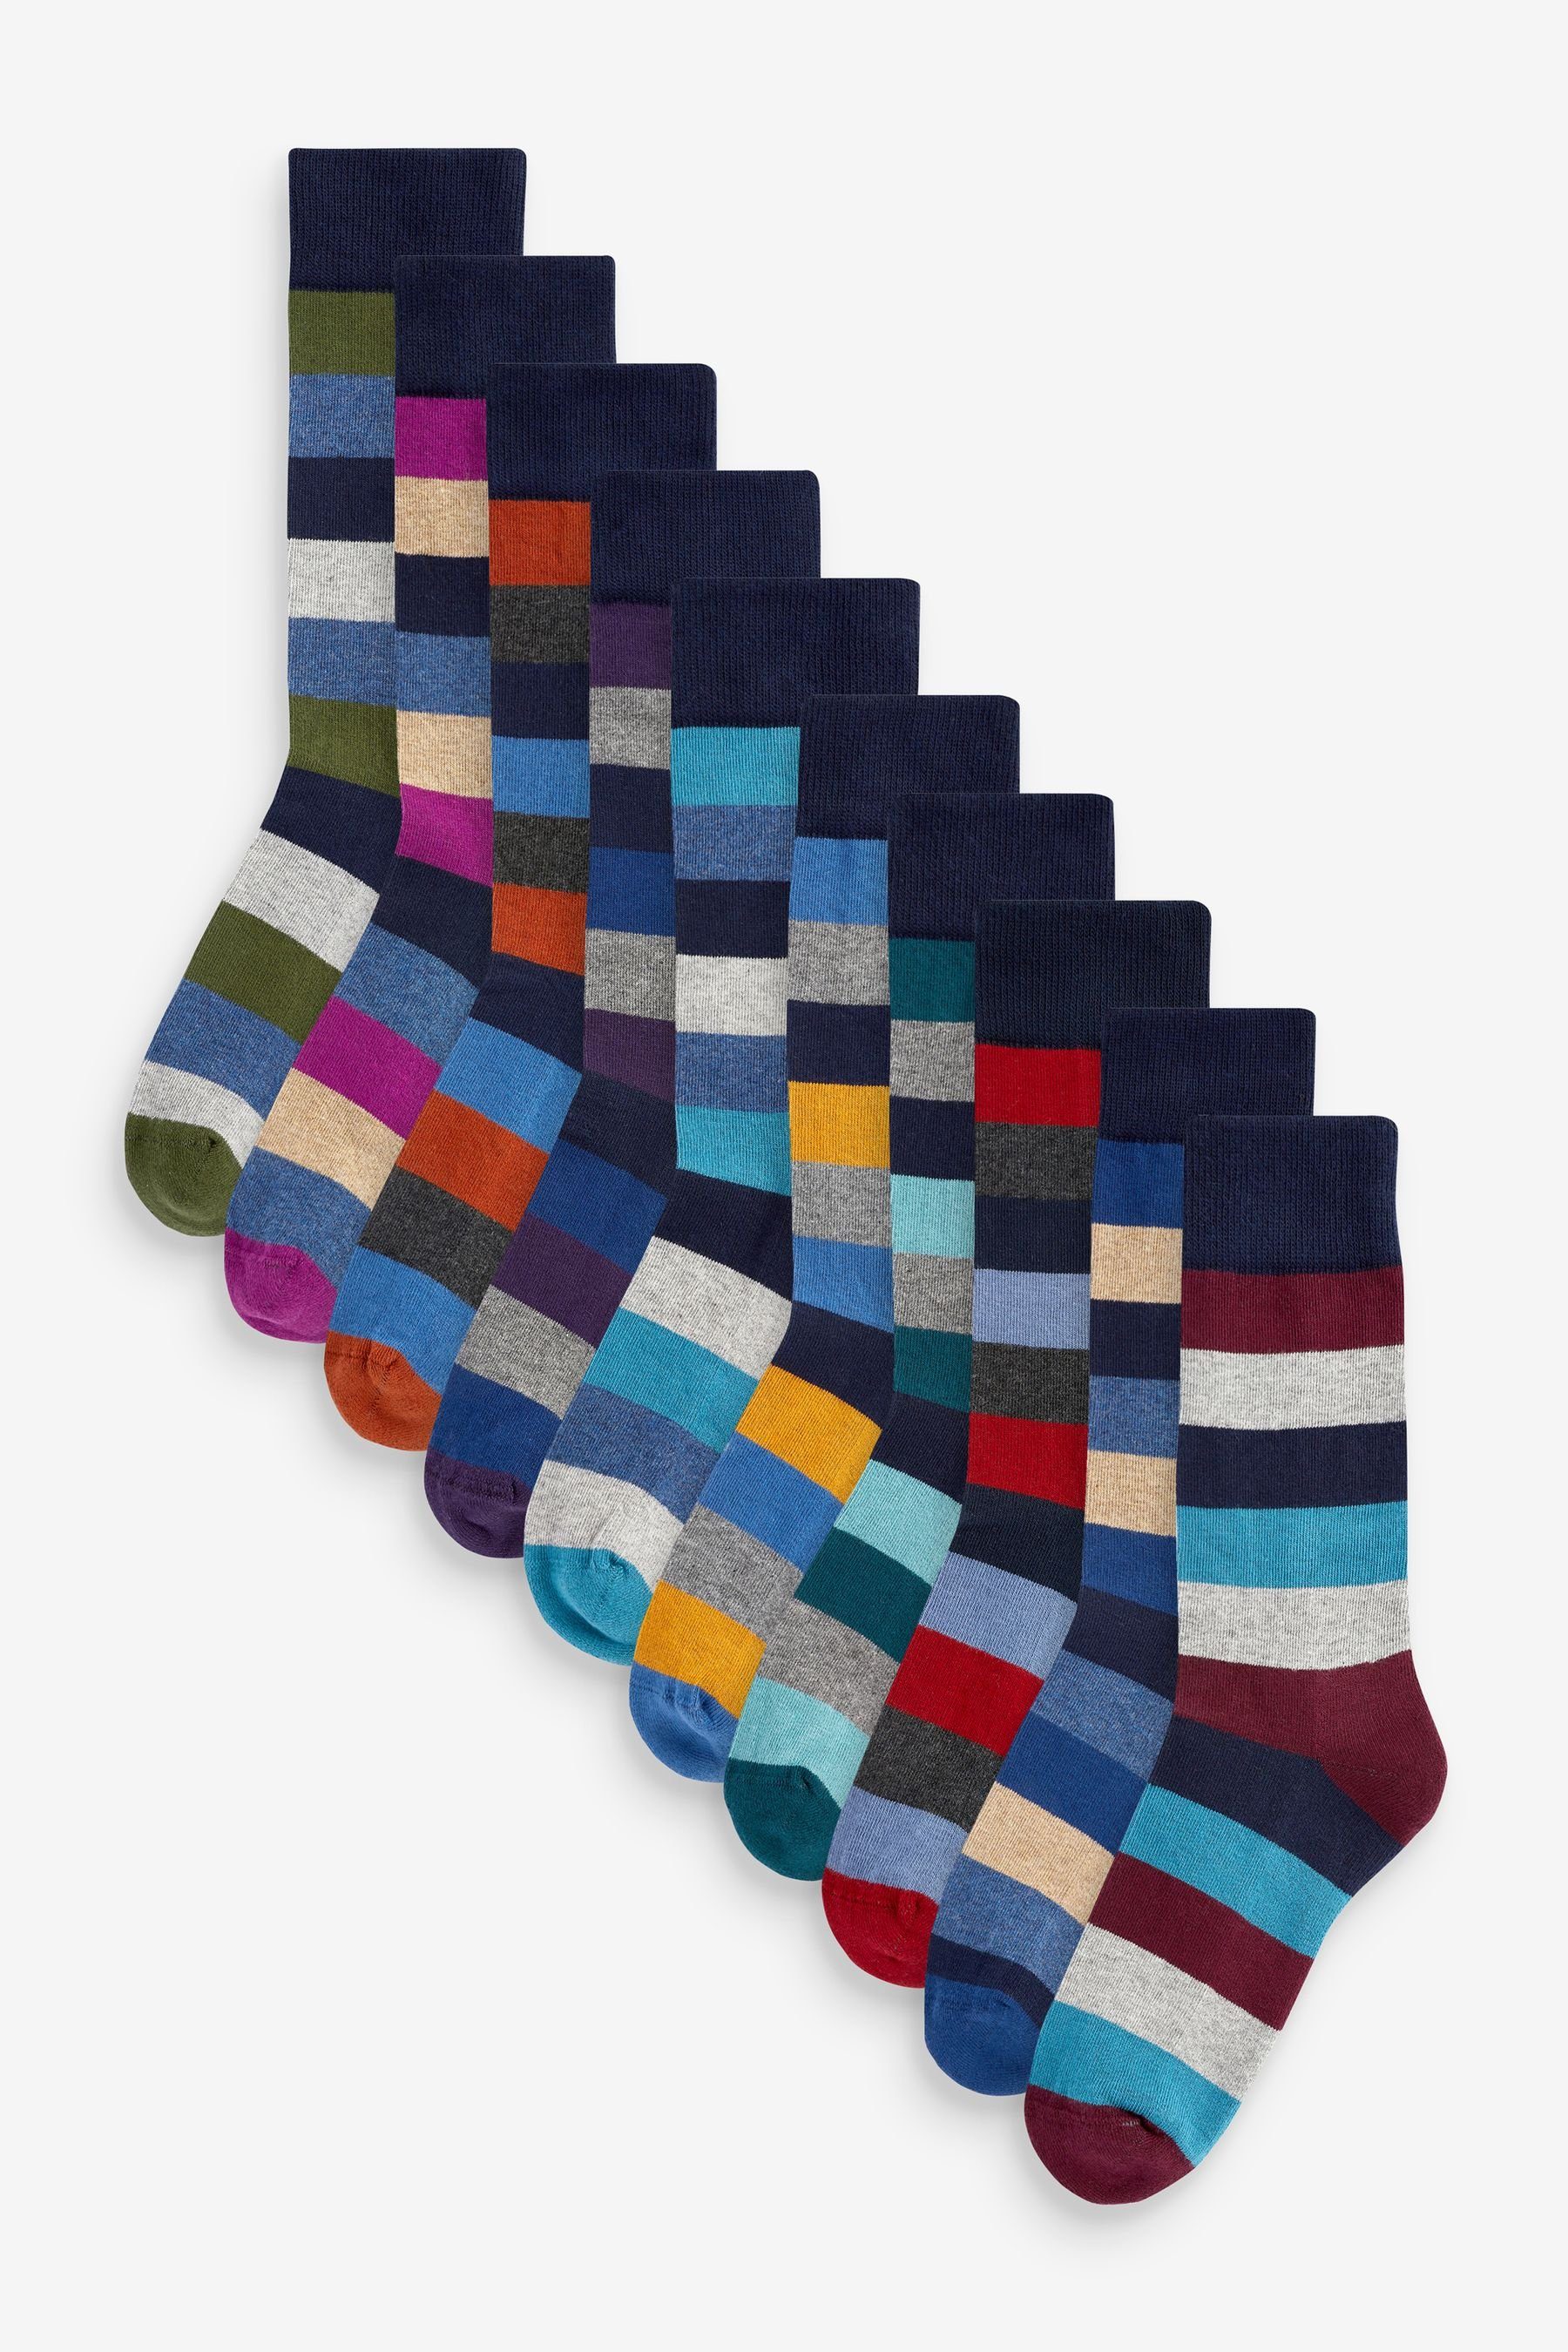 Next Kurzsocken Socken mit gepolsterter Sohle, 10er-Pack (10-Paar) Stripe